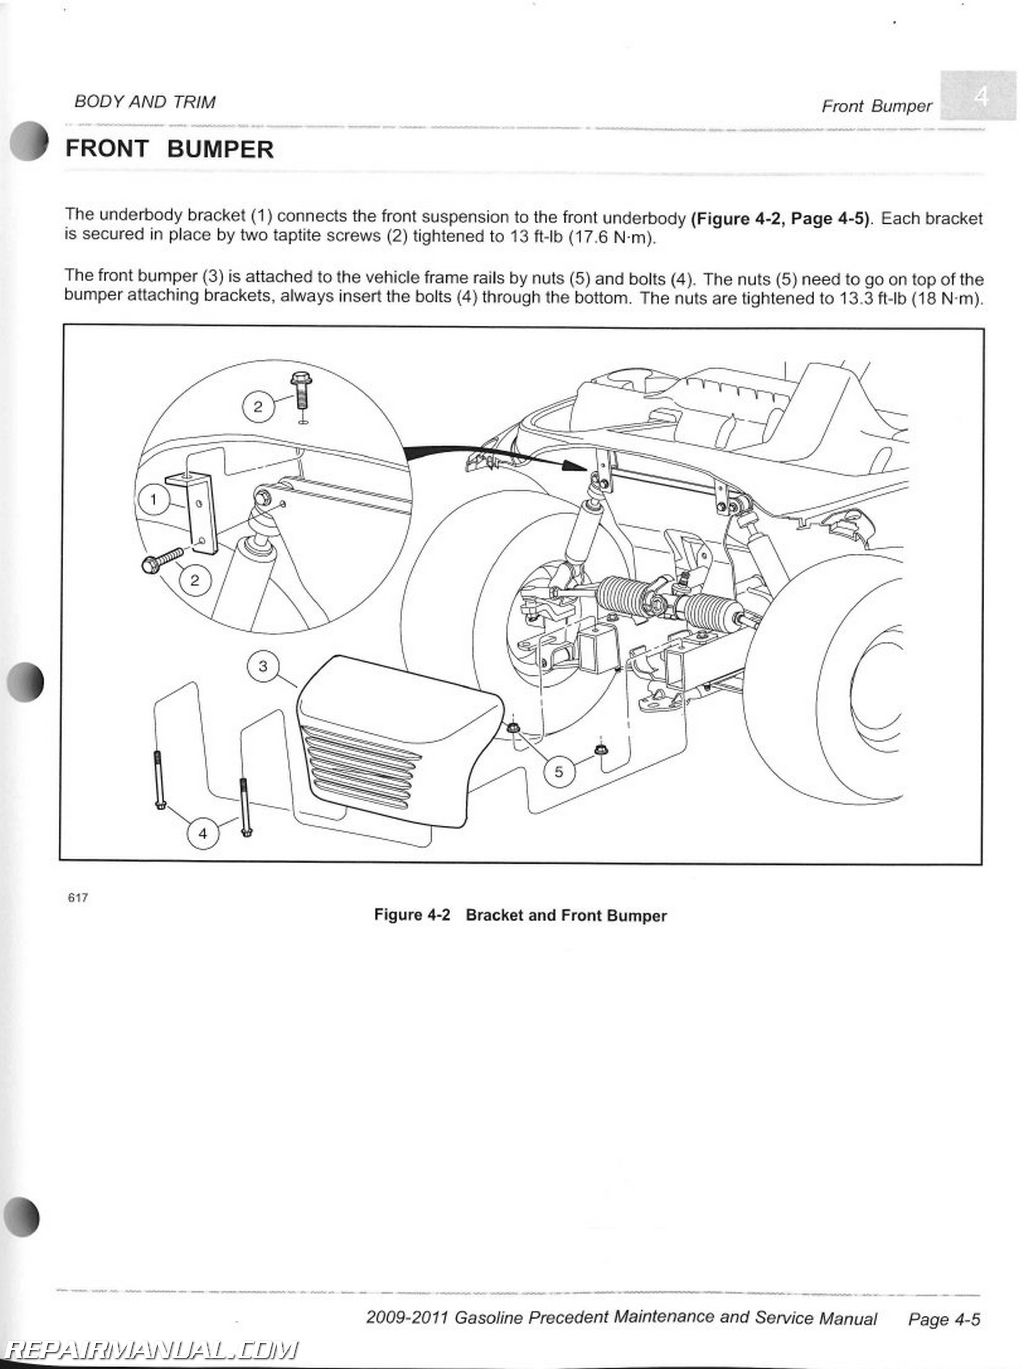 2009-2011 Club Car Gasoline Precedent Maintenance And Service Manual